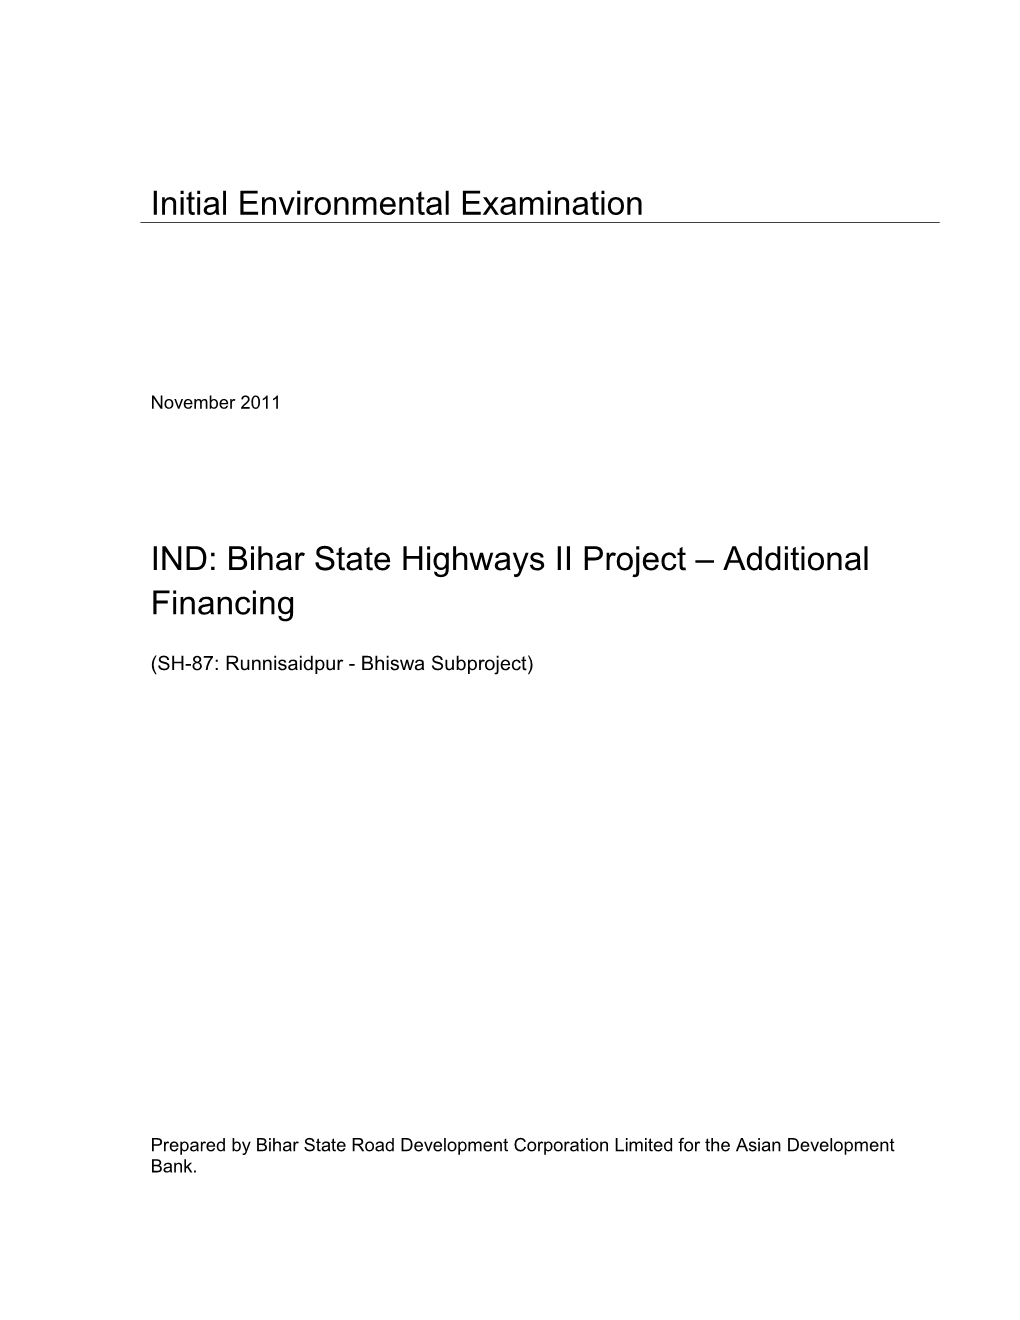 IEE: India: SH-87: Runnisaidpur-Bhiswa Subproject, Bihar State Highways II Project